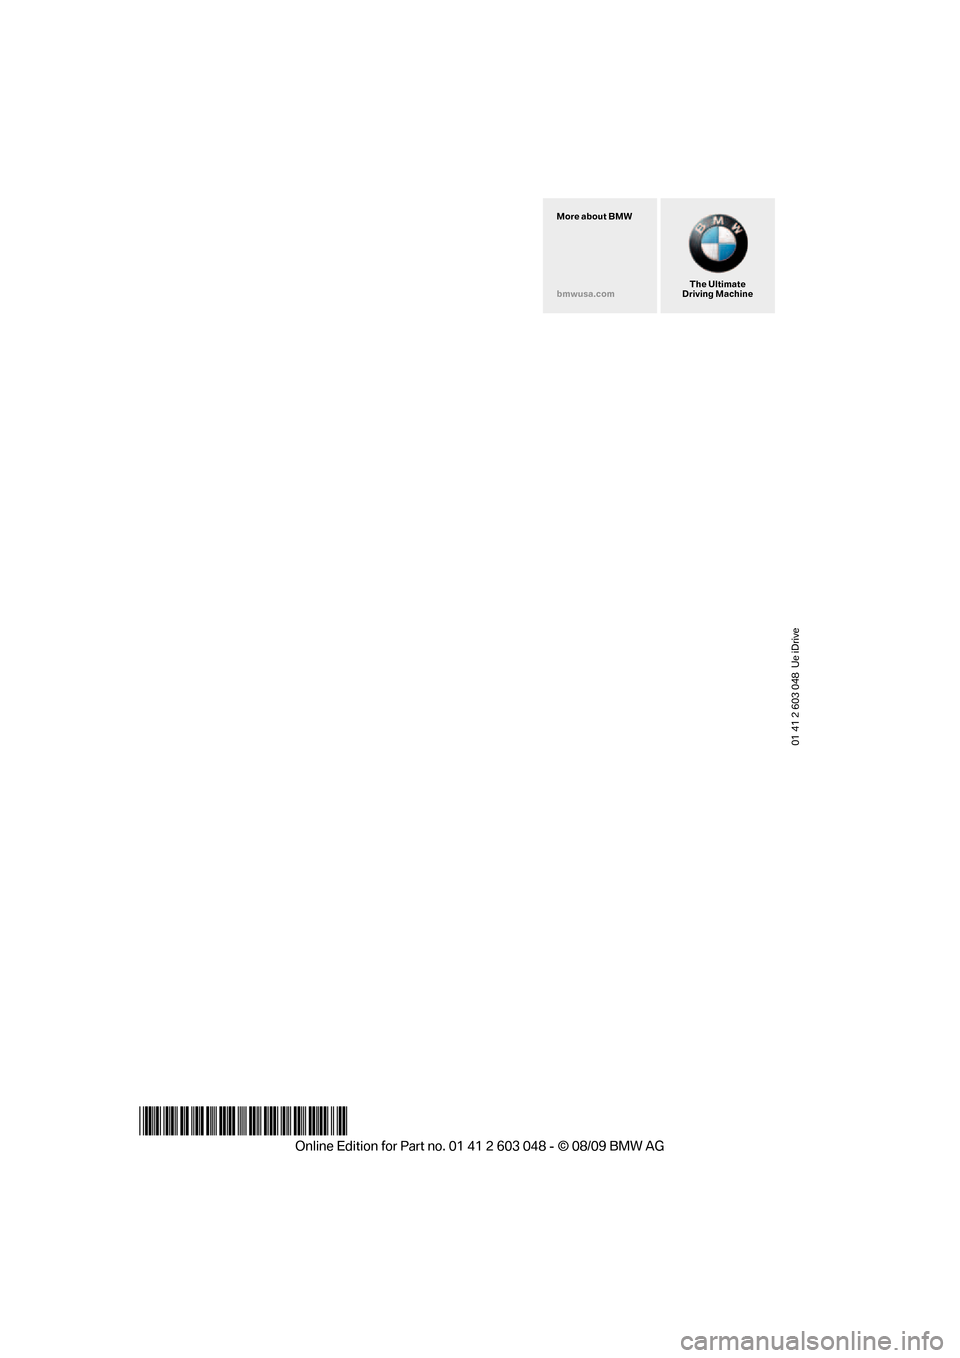 BMW 335I XDRIVE SEDAN 2010 E90 Owners Manual 01 41 2 603 048  Ue iDrive
*BL260304800P*
The Ultimate
Driving Machine More about BMW
bmwusa.com 